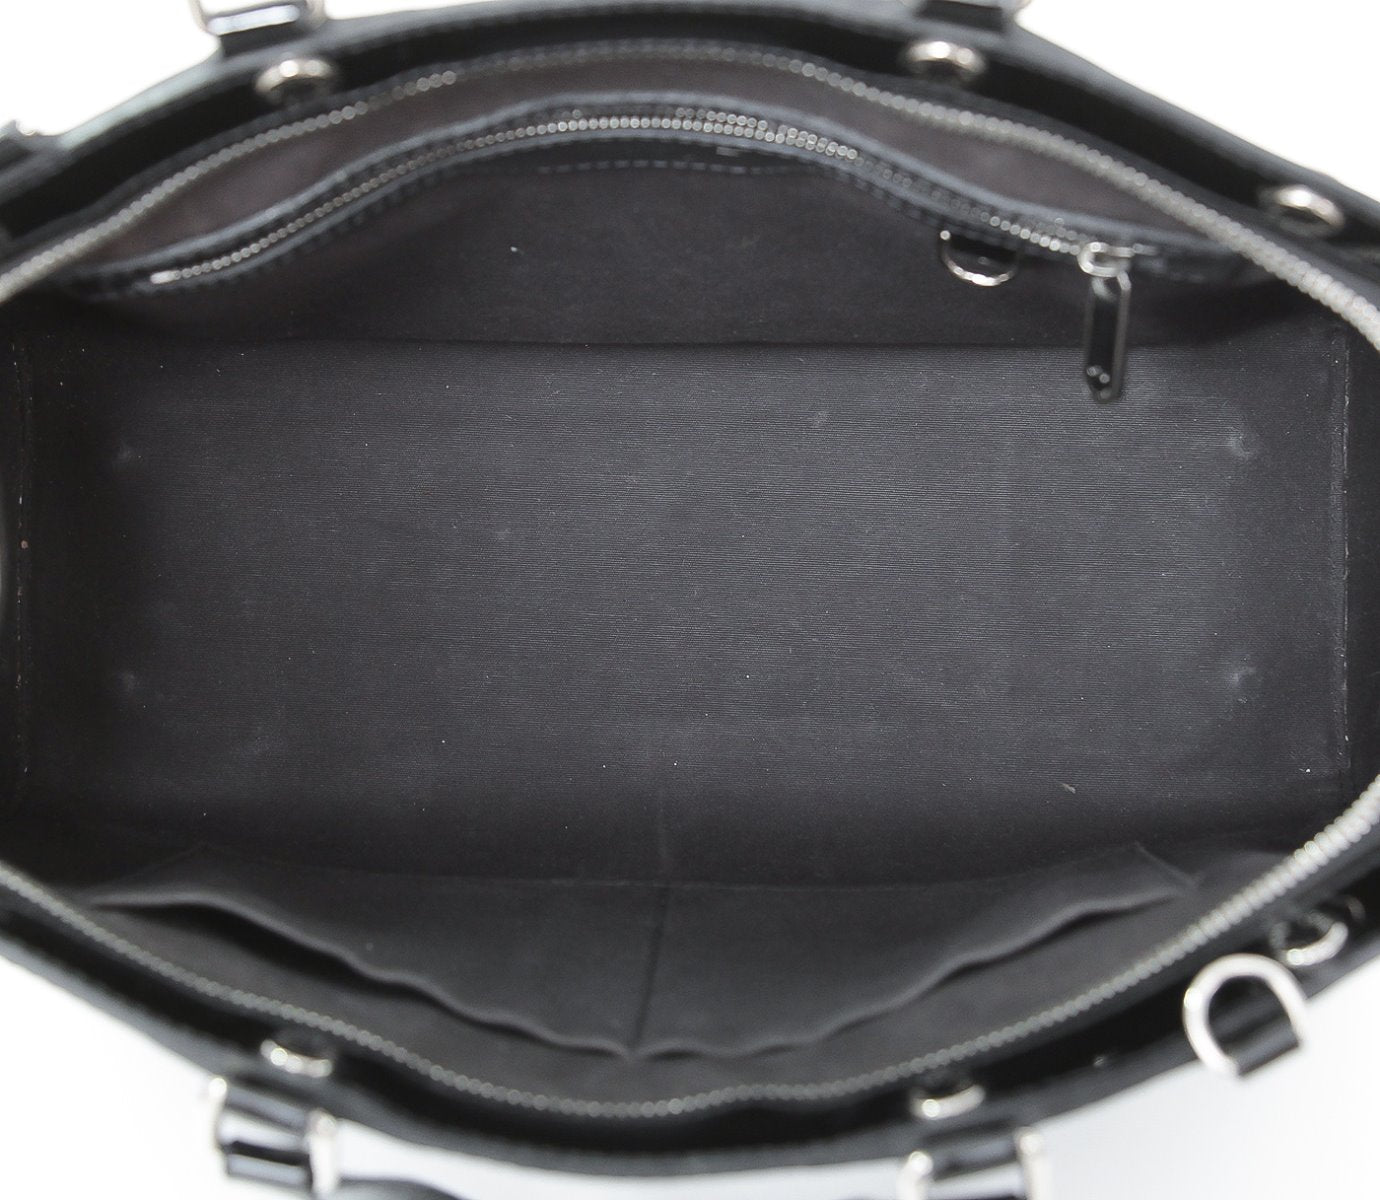 Louis Vuitton Black Epi Brea MM Bag